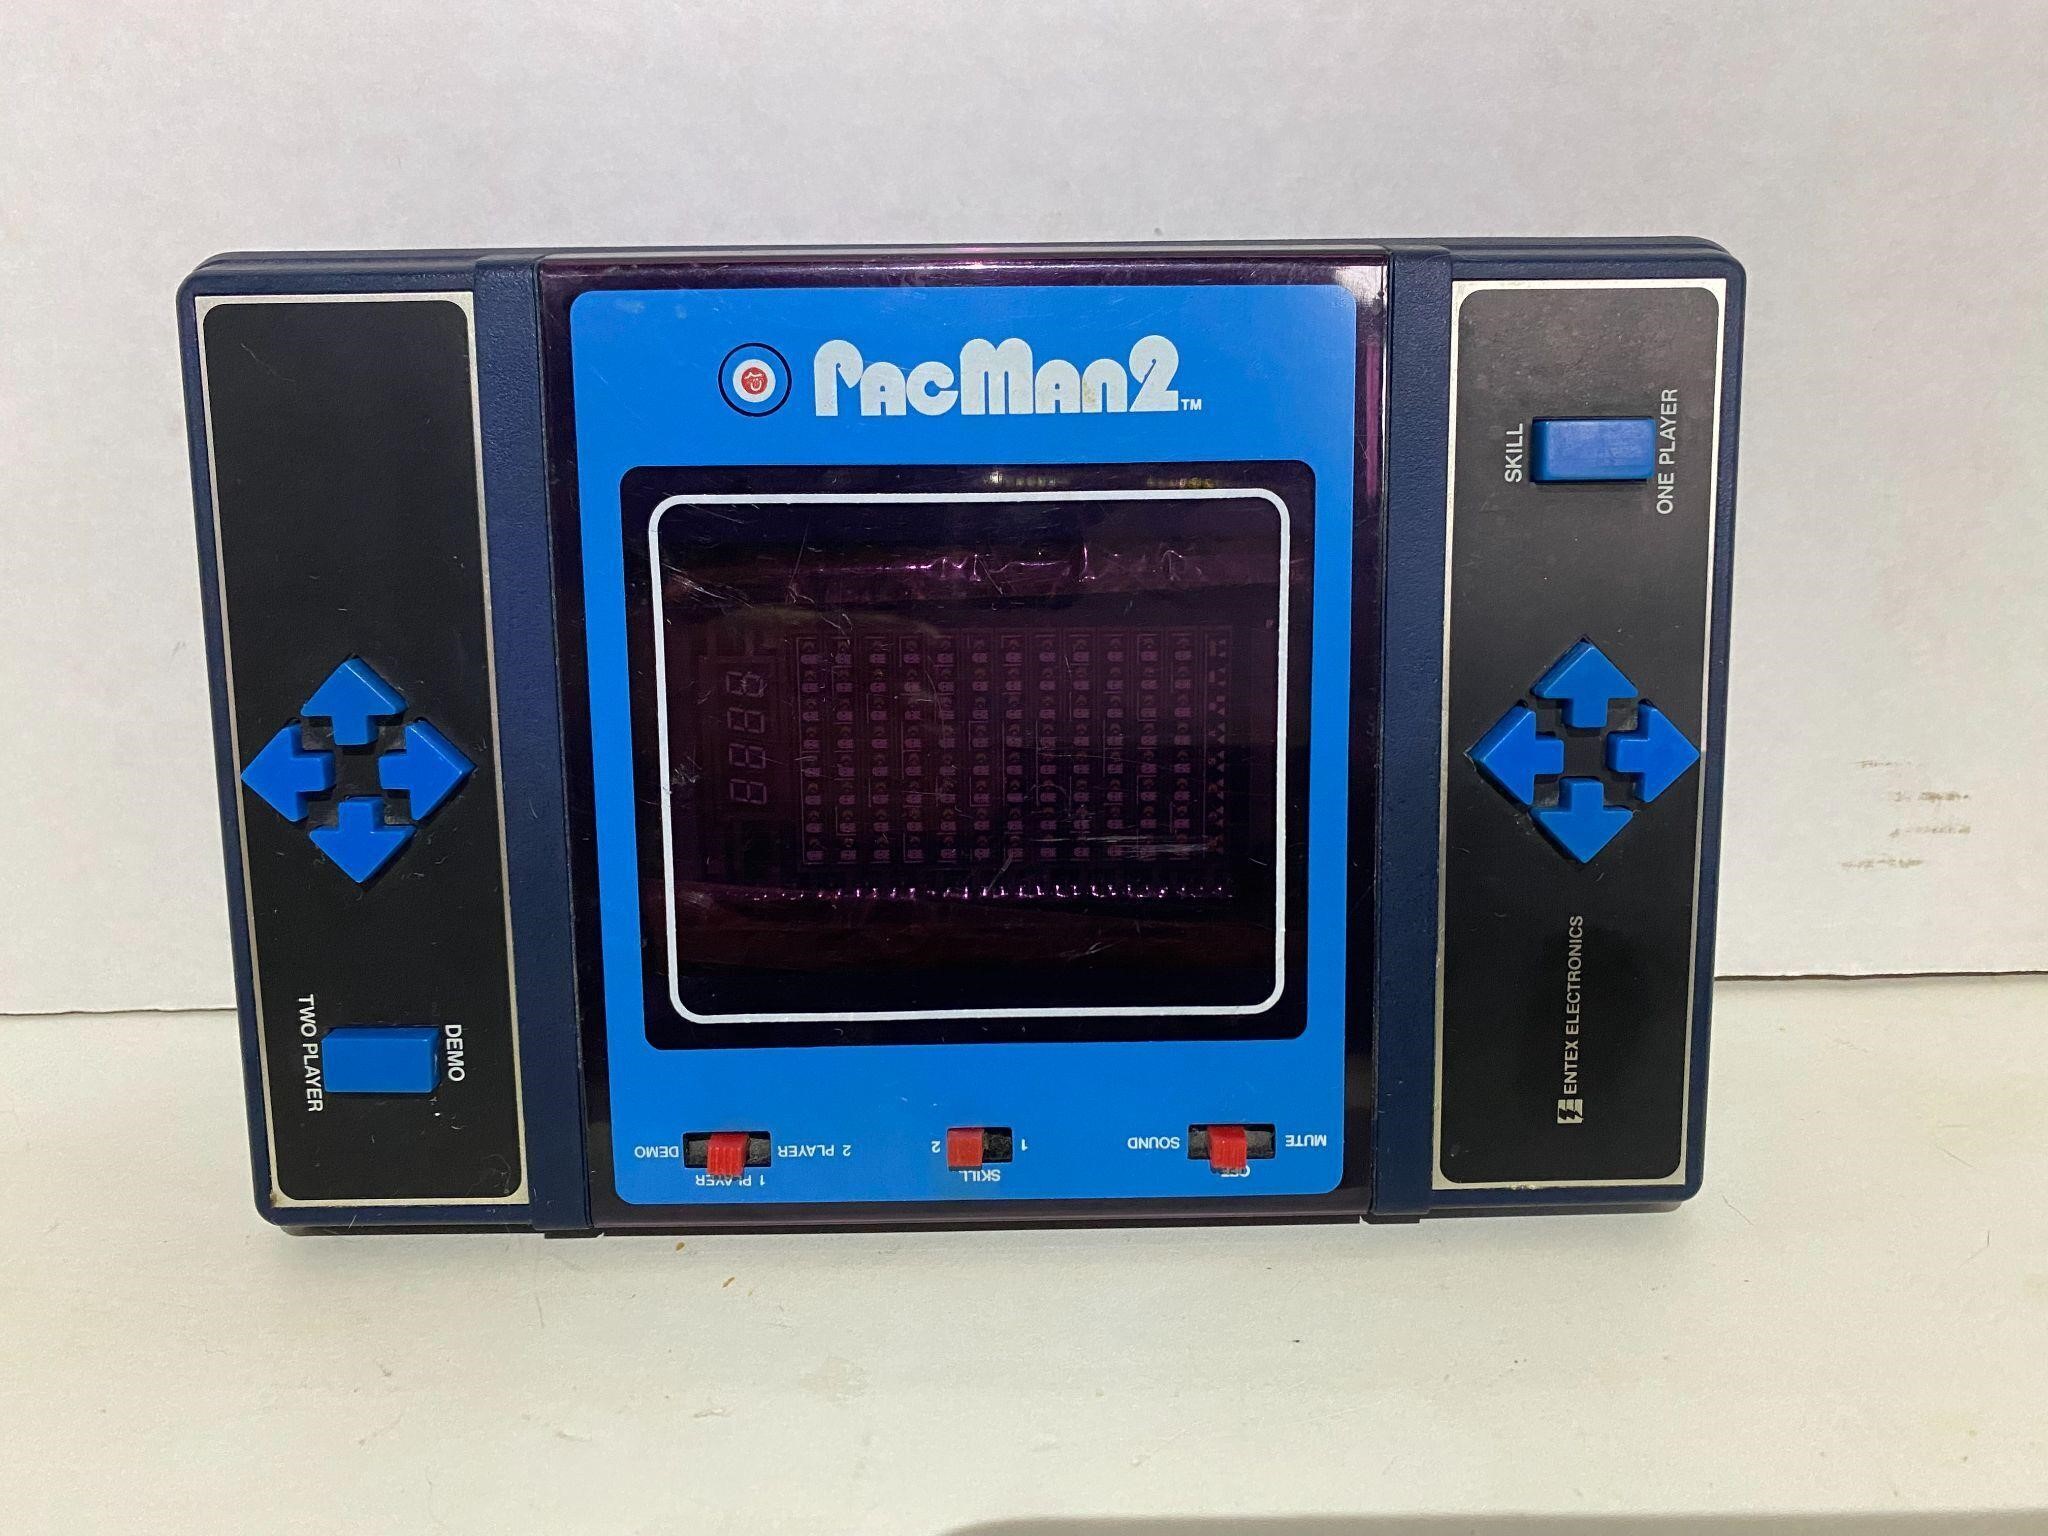 Entex Electronics 1980 Pacman2 Handheld Electronic